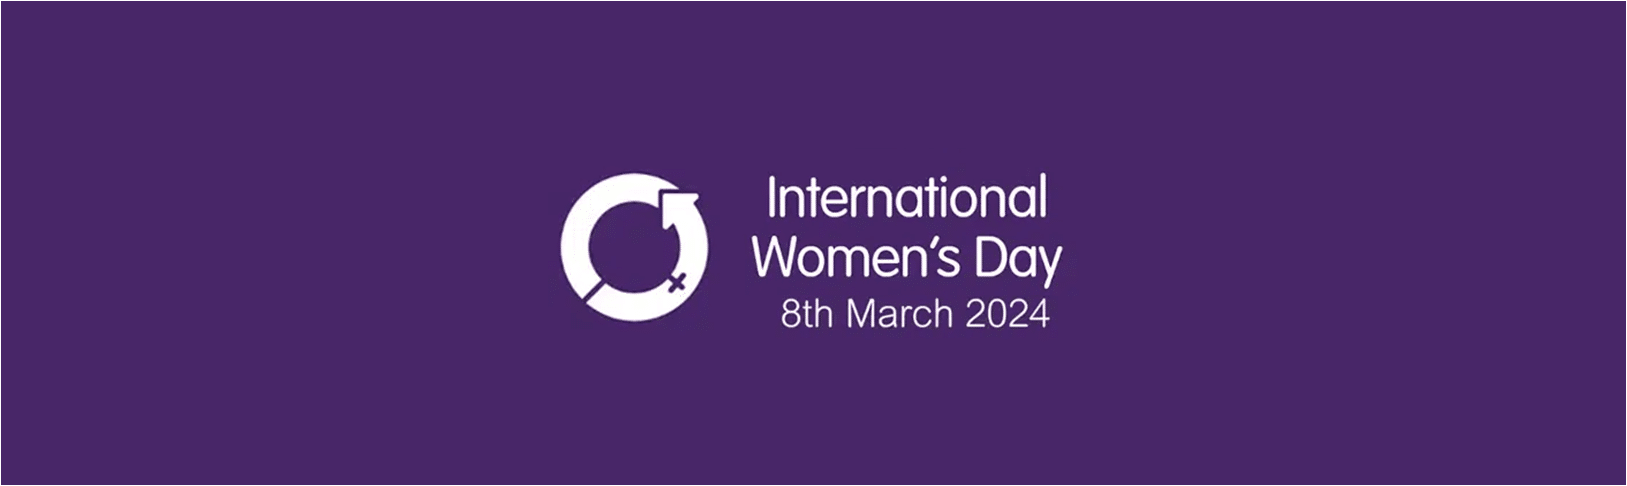 International Women’s Day 2024: Inspiring Inclusion